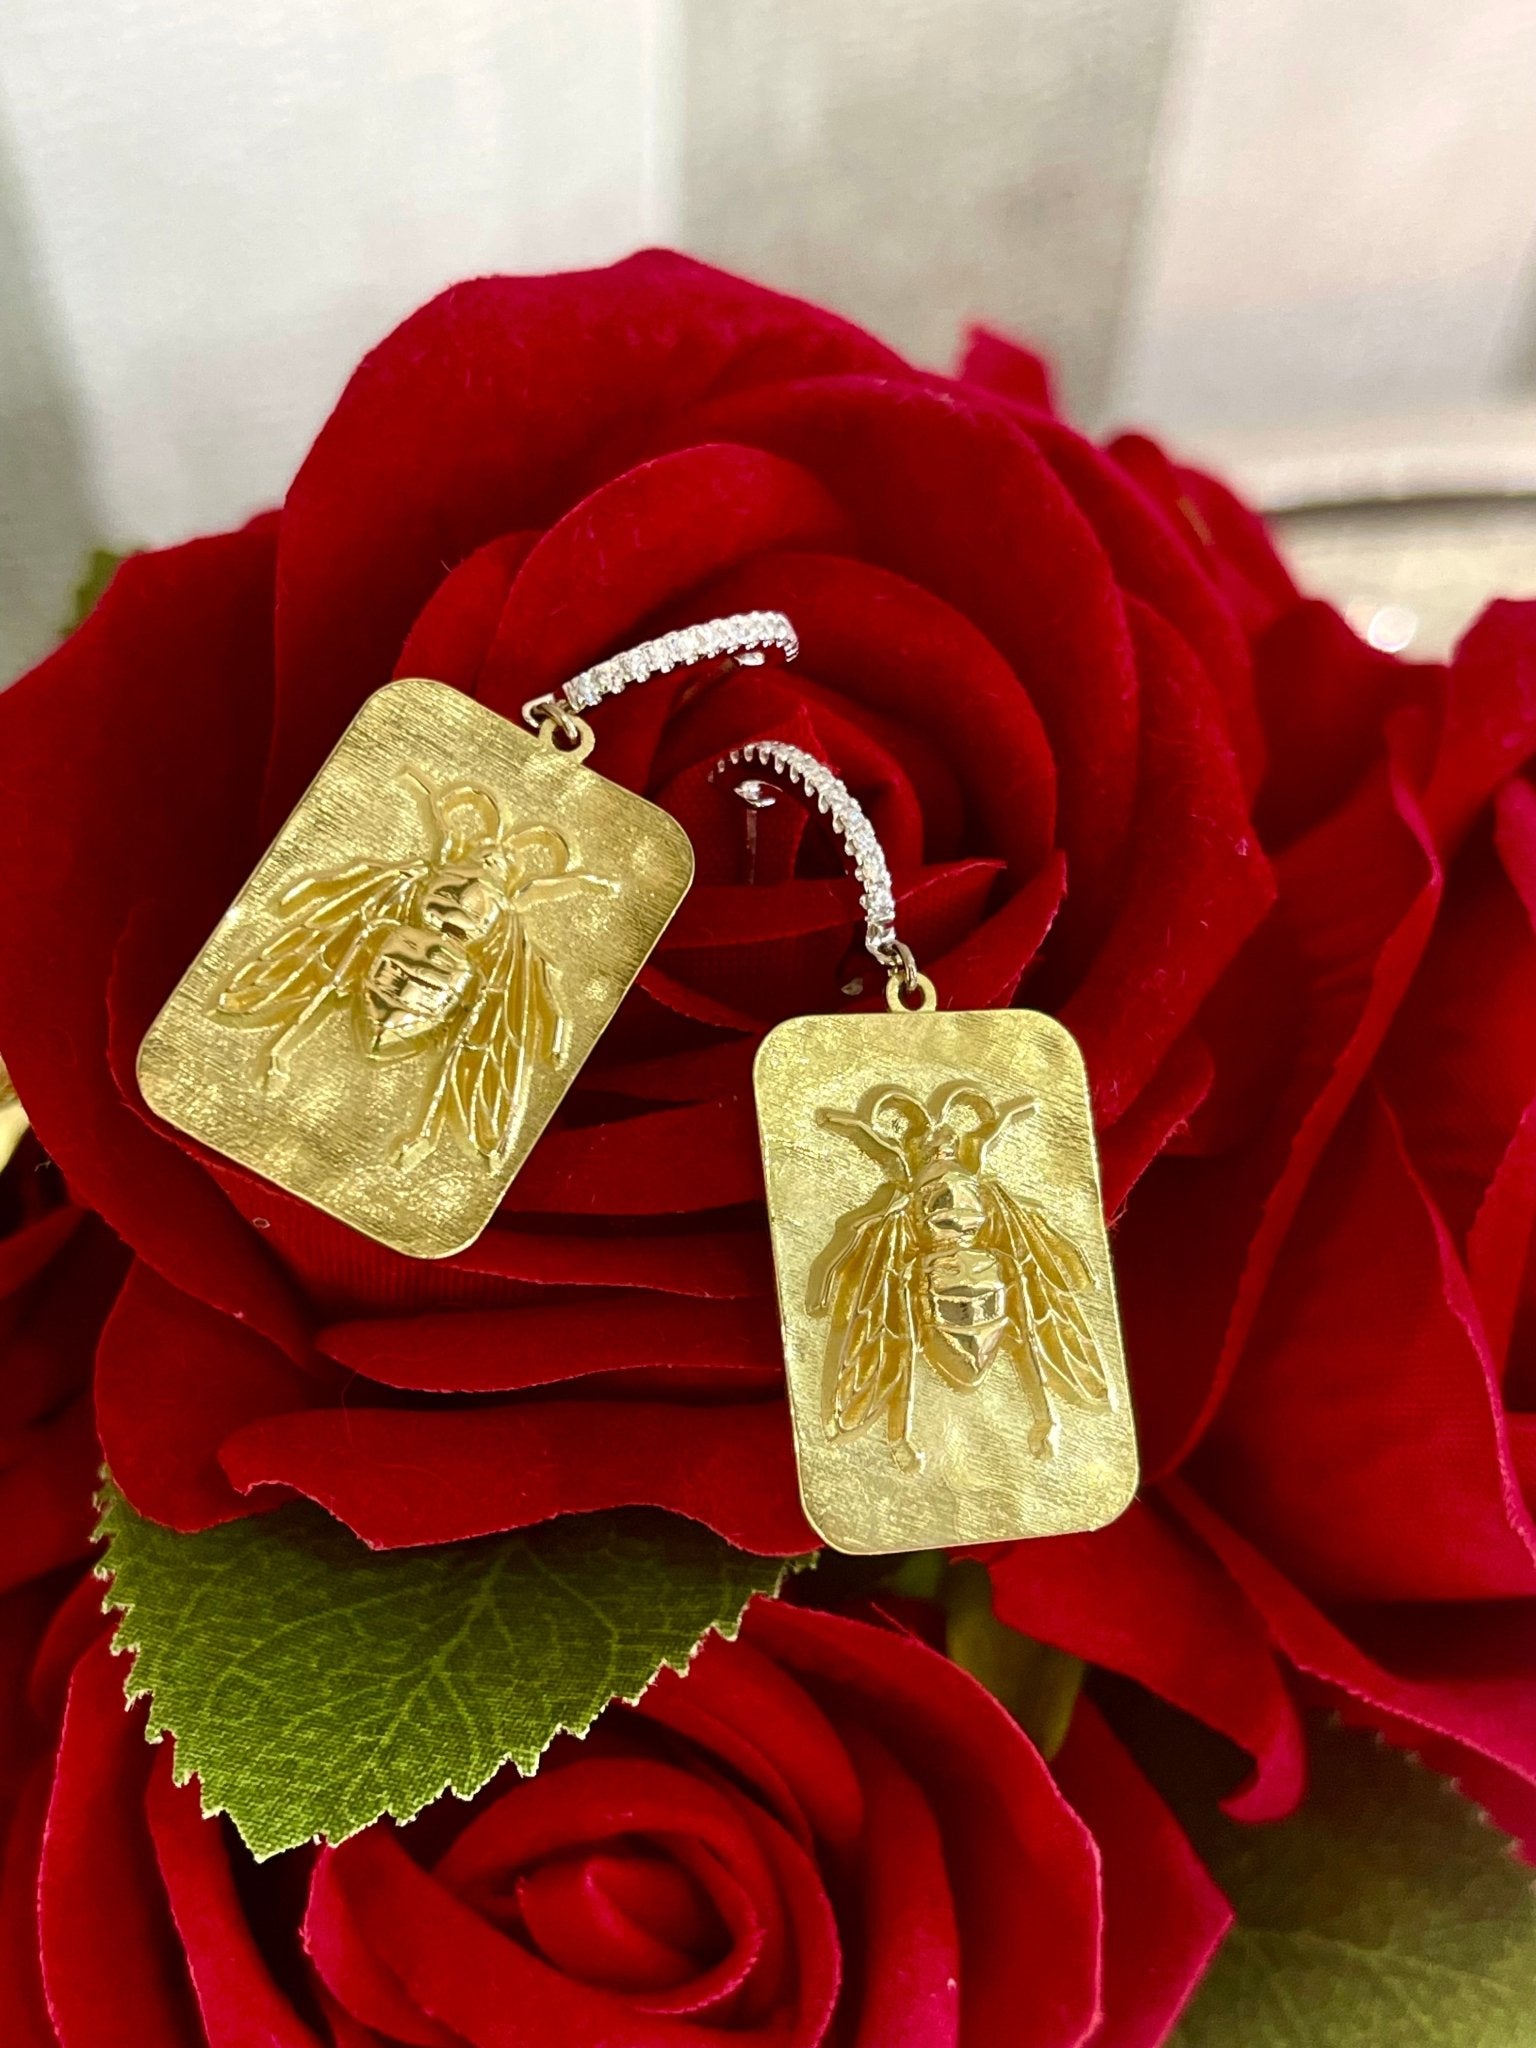 Bee Diamond Huggie Earrings in 18k yellow gold - ForeverJewels Design Studio 8